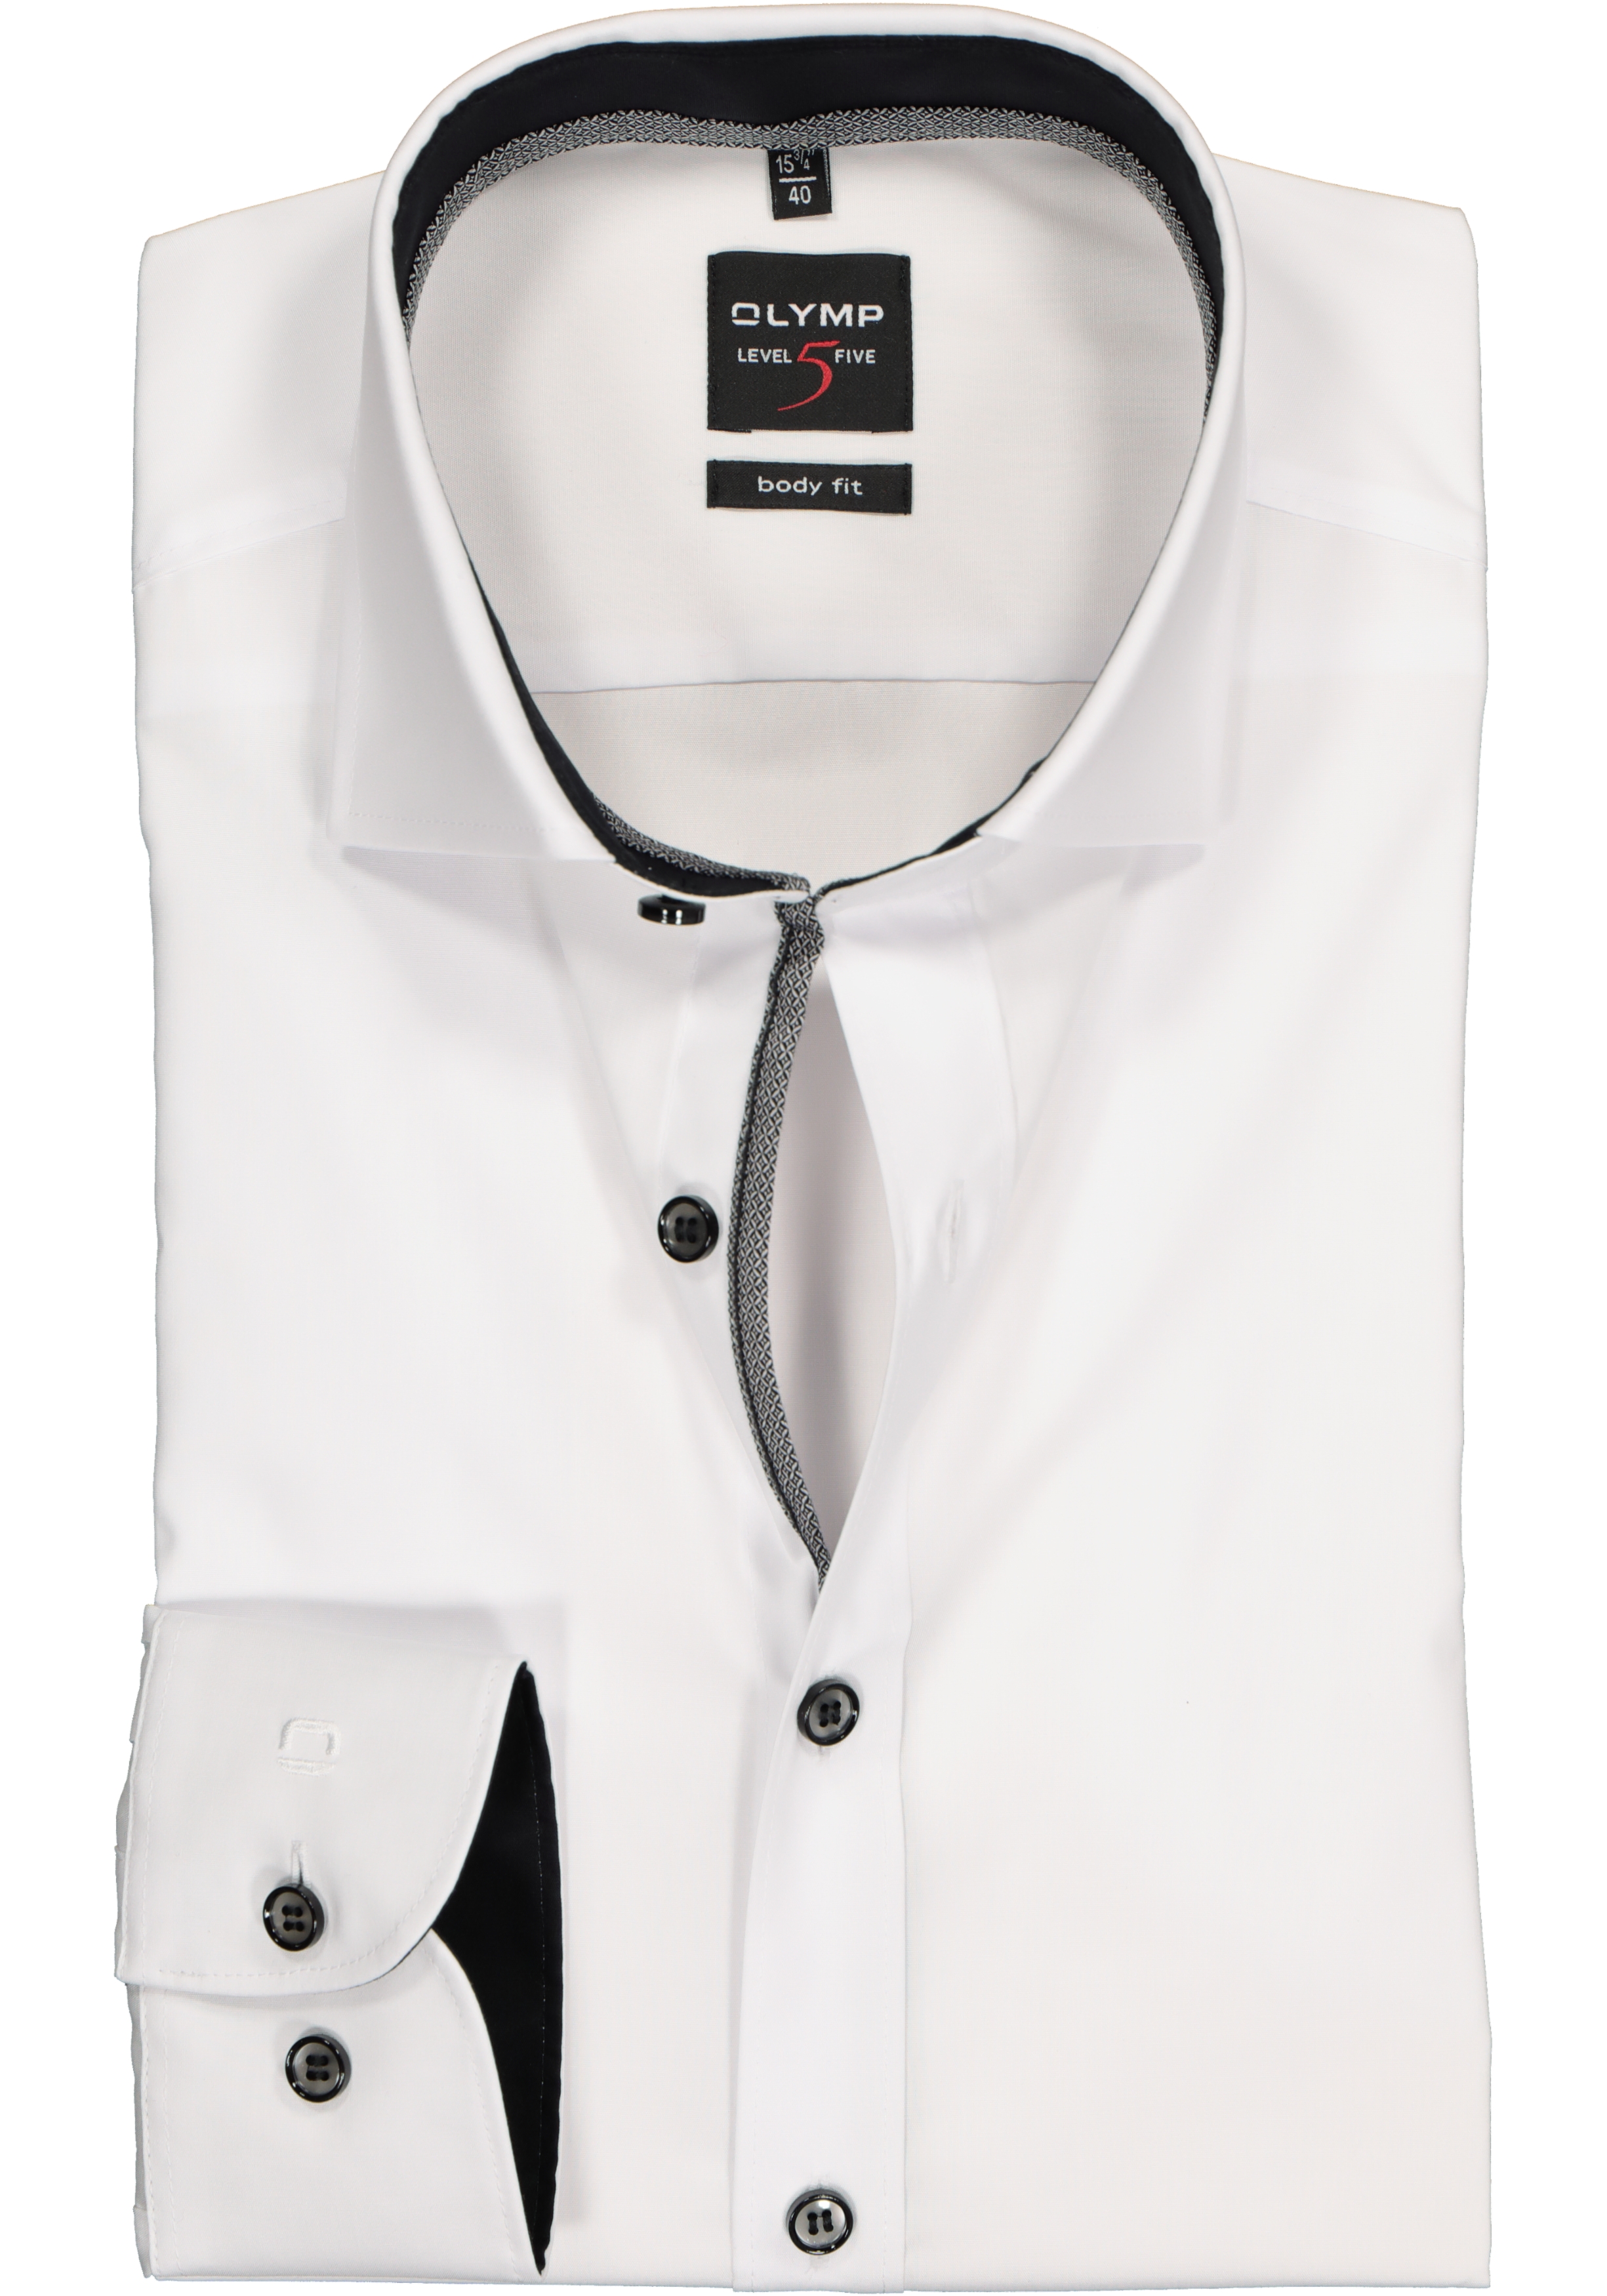 OLYMP Level 5 body fit overhemd, mouwlengte 7, wit (zwart contrast)